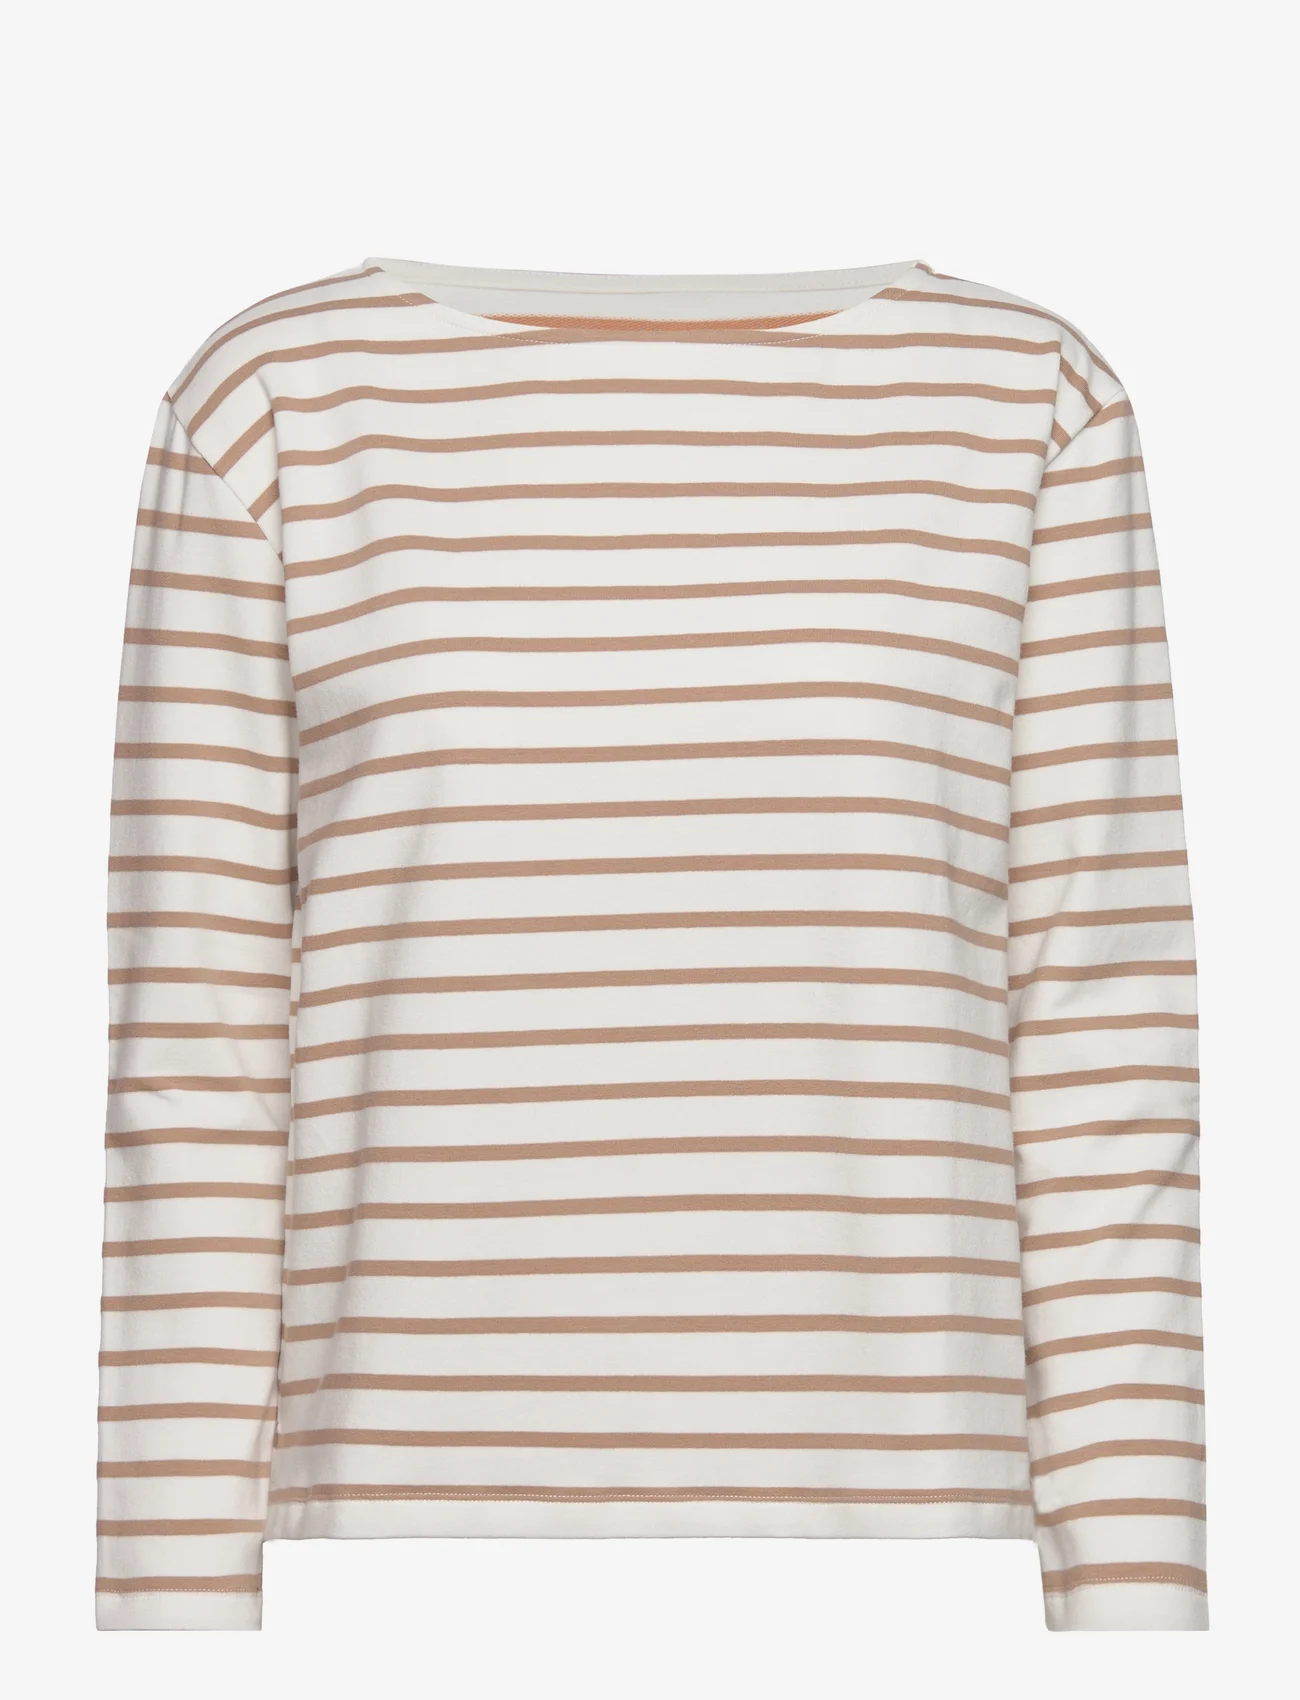 Moshi Moshi Mind - blessed sweatshirt stripe - long-sleeved tops - ecru / warm sand - 1